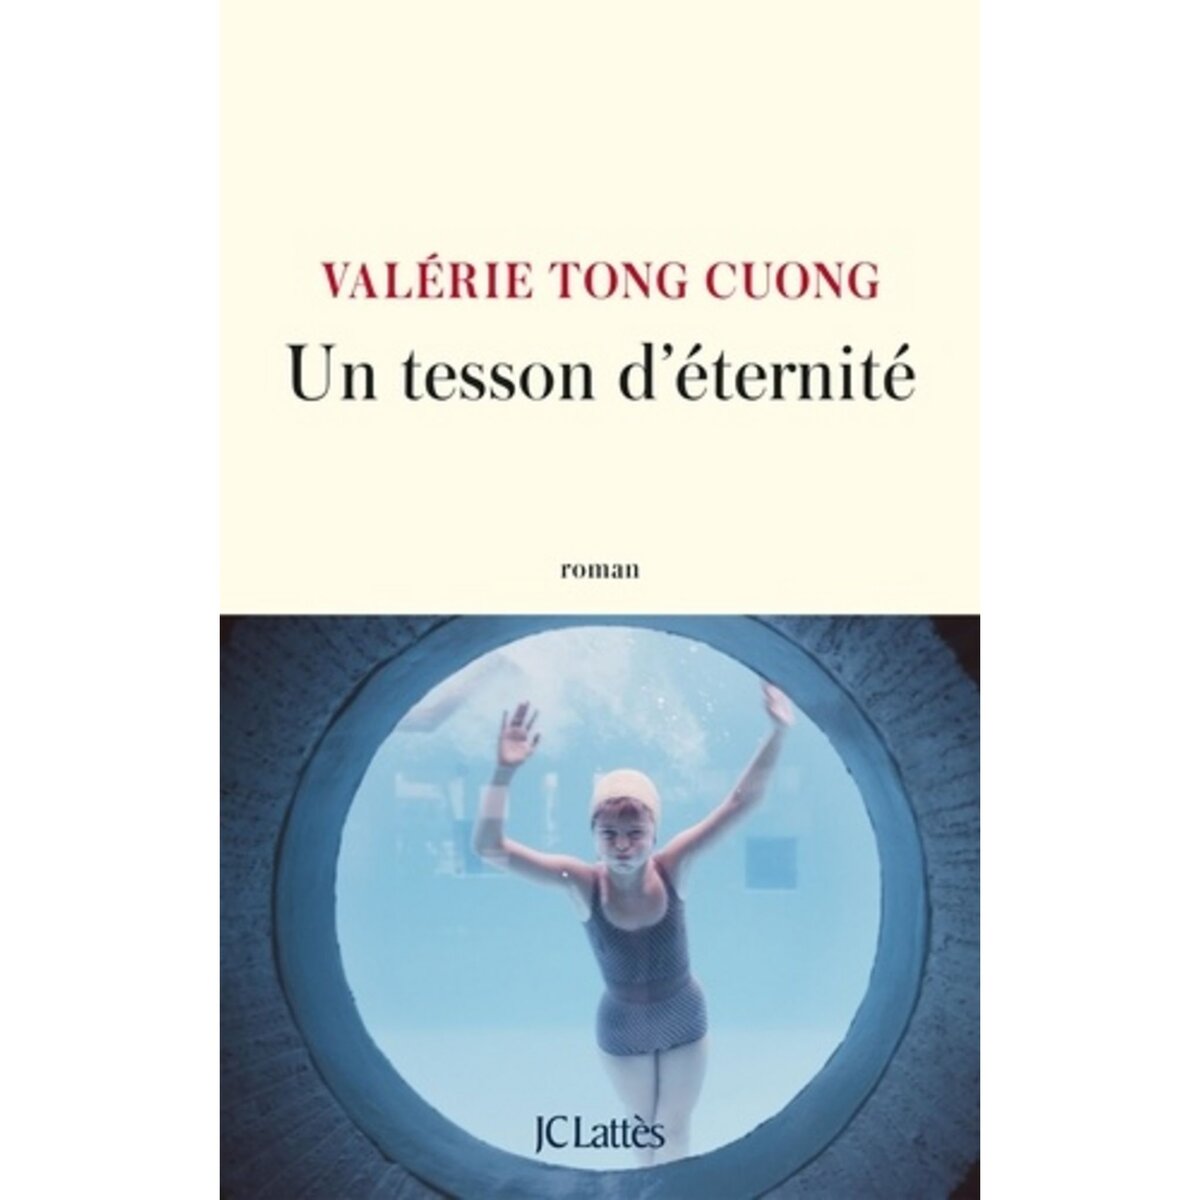  UN TESSON D'ETERNITE, Tong Cuong Valérie